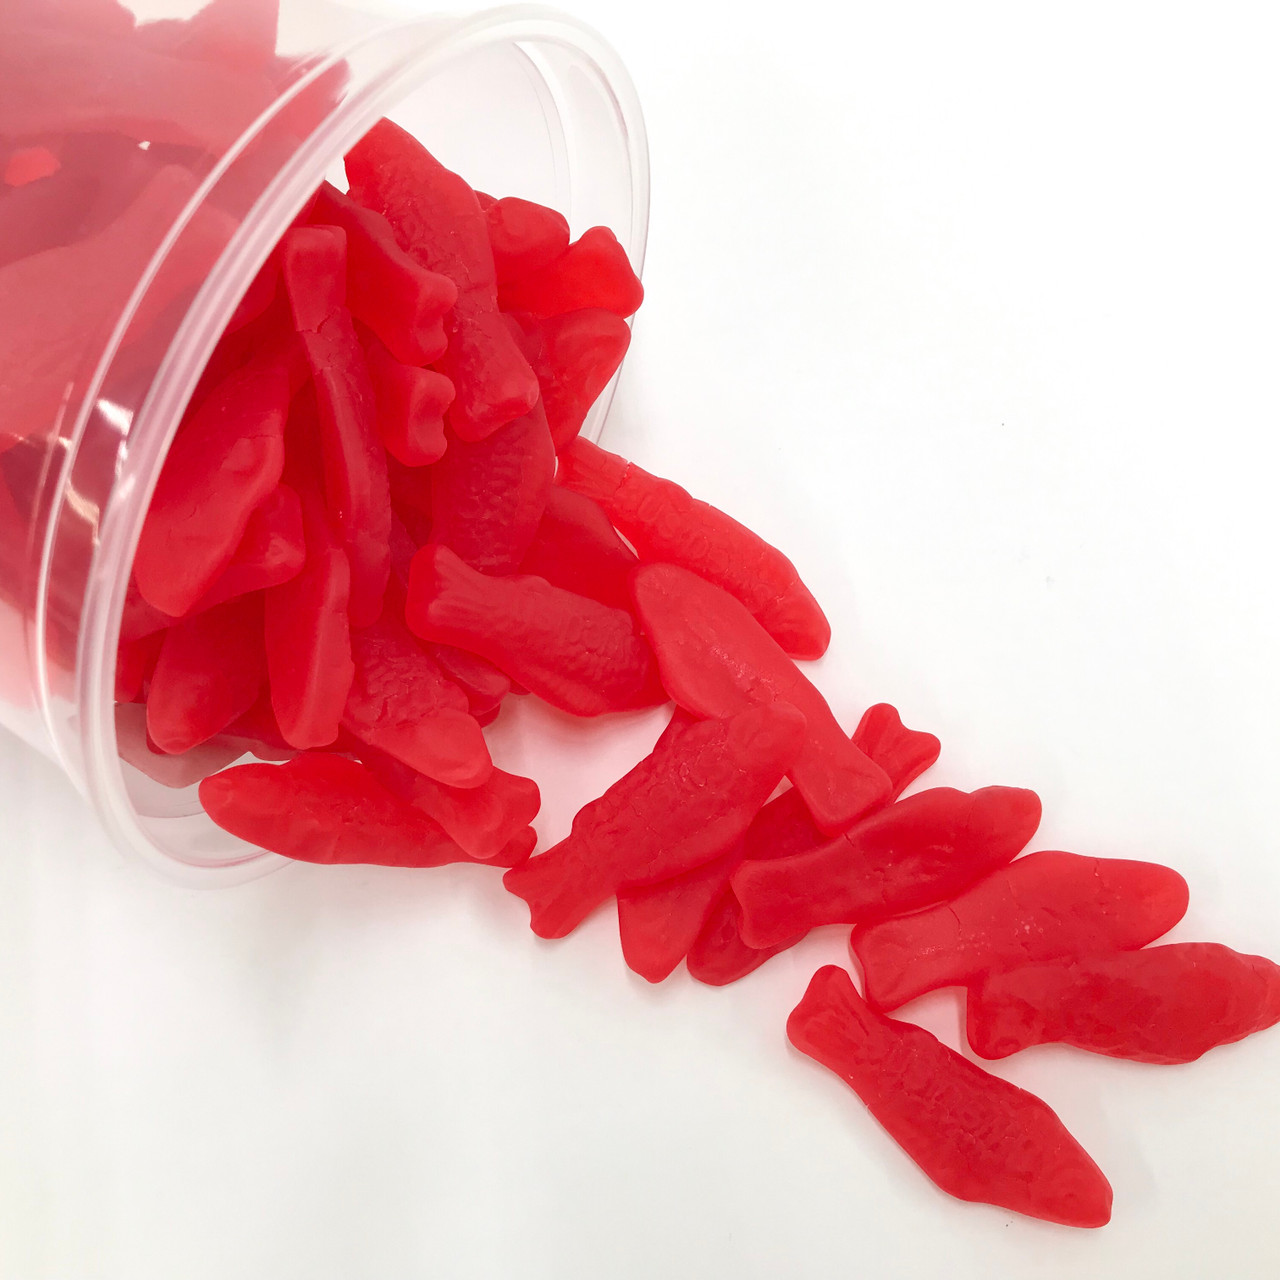 Red Swedish Fish - Stutz Candy Company, Inc.